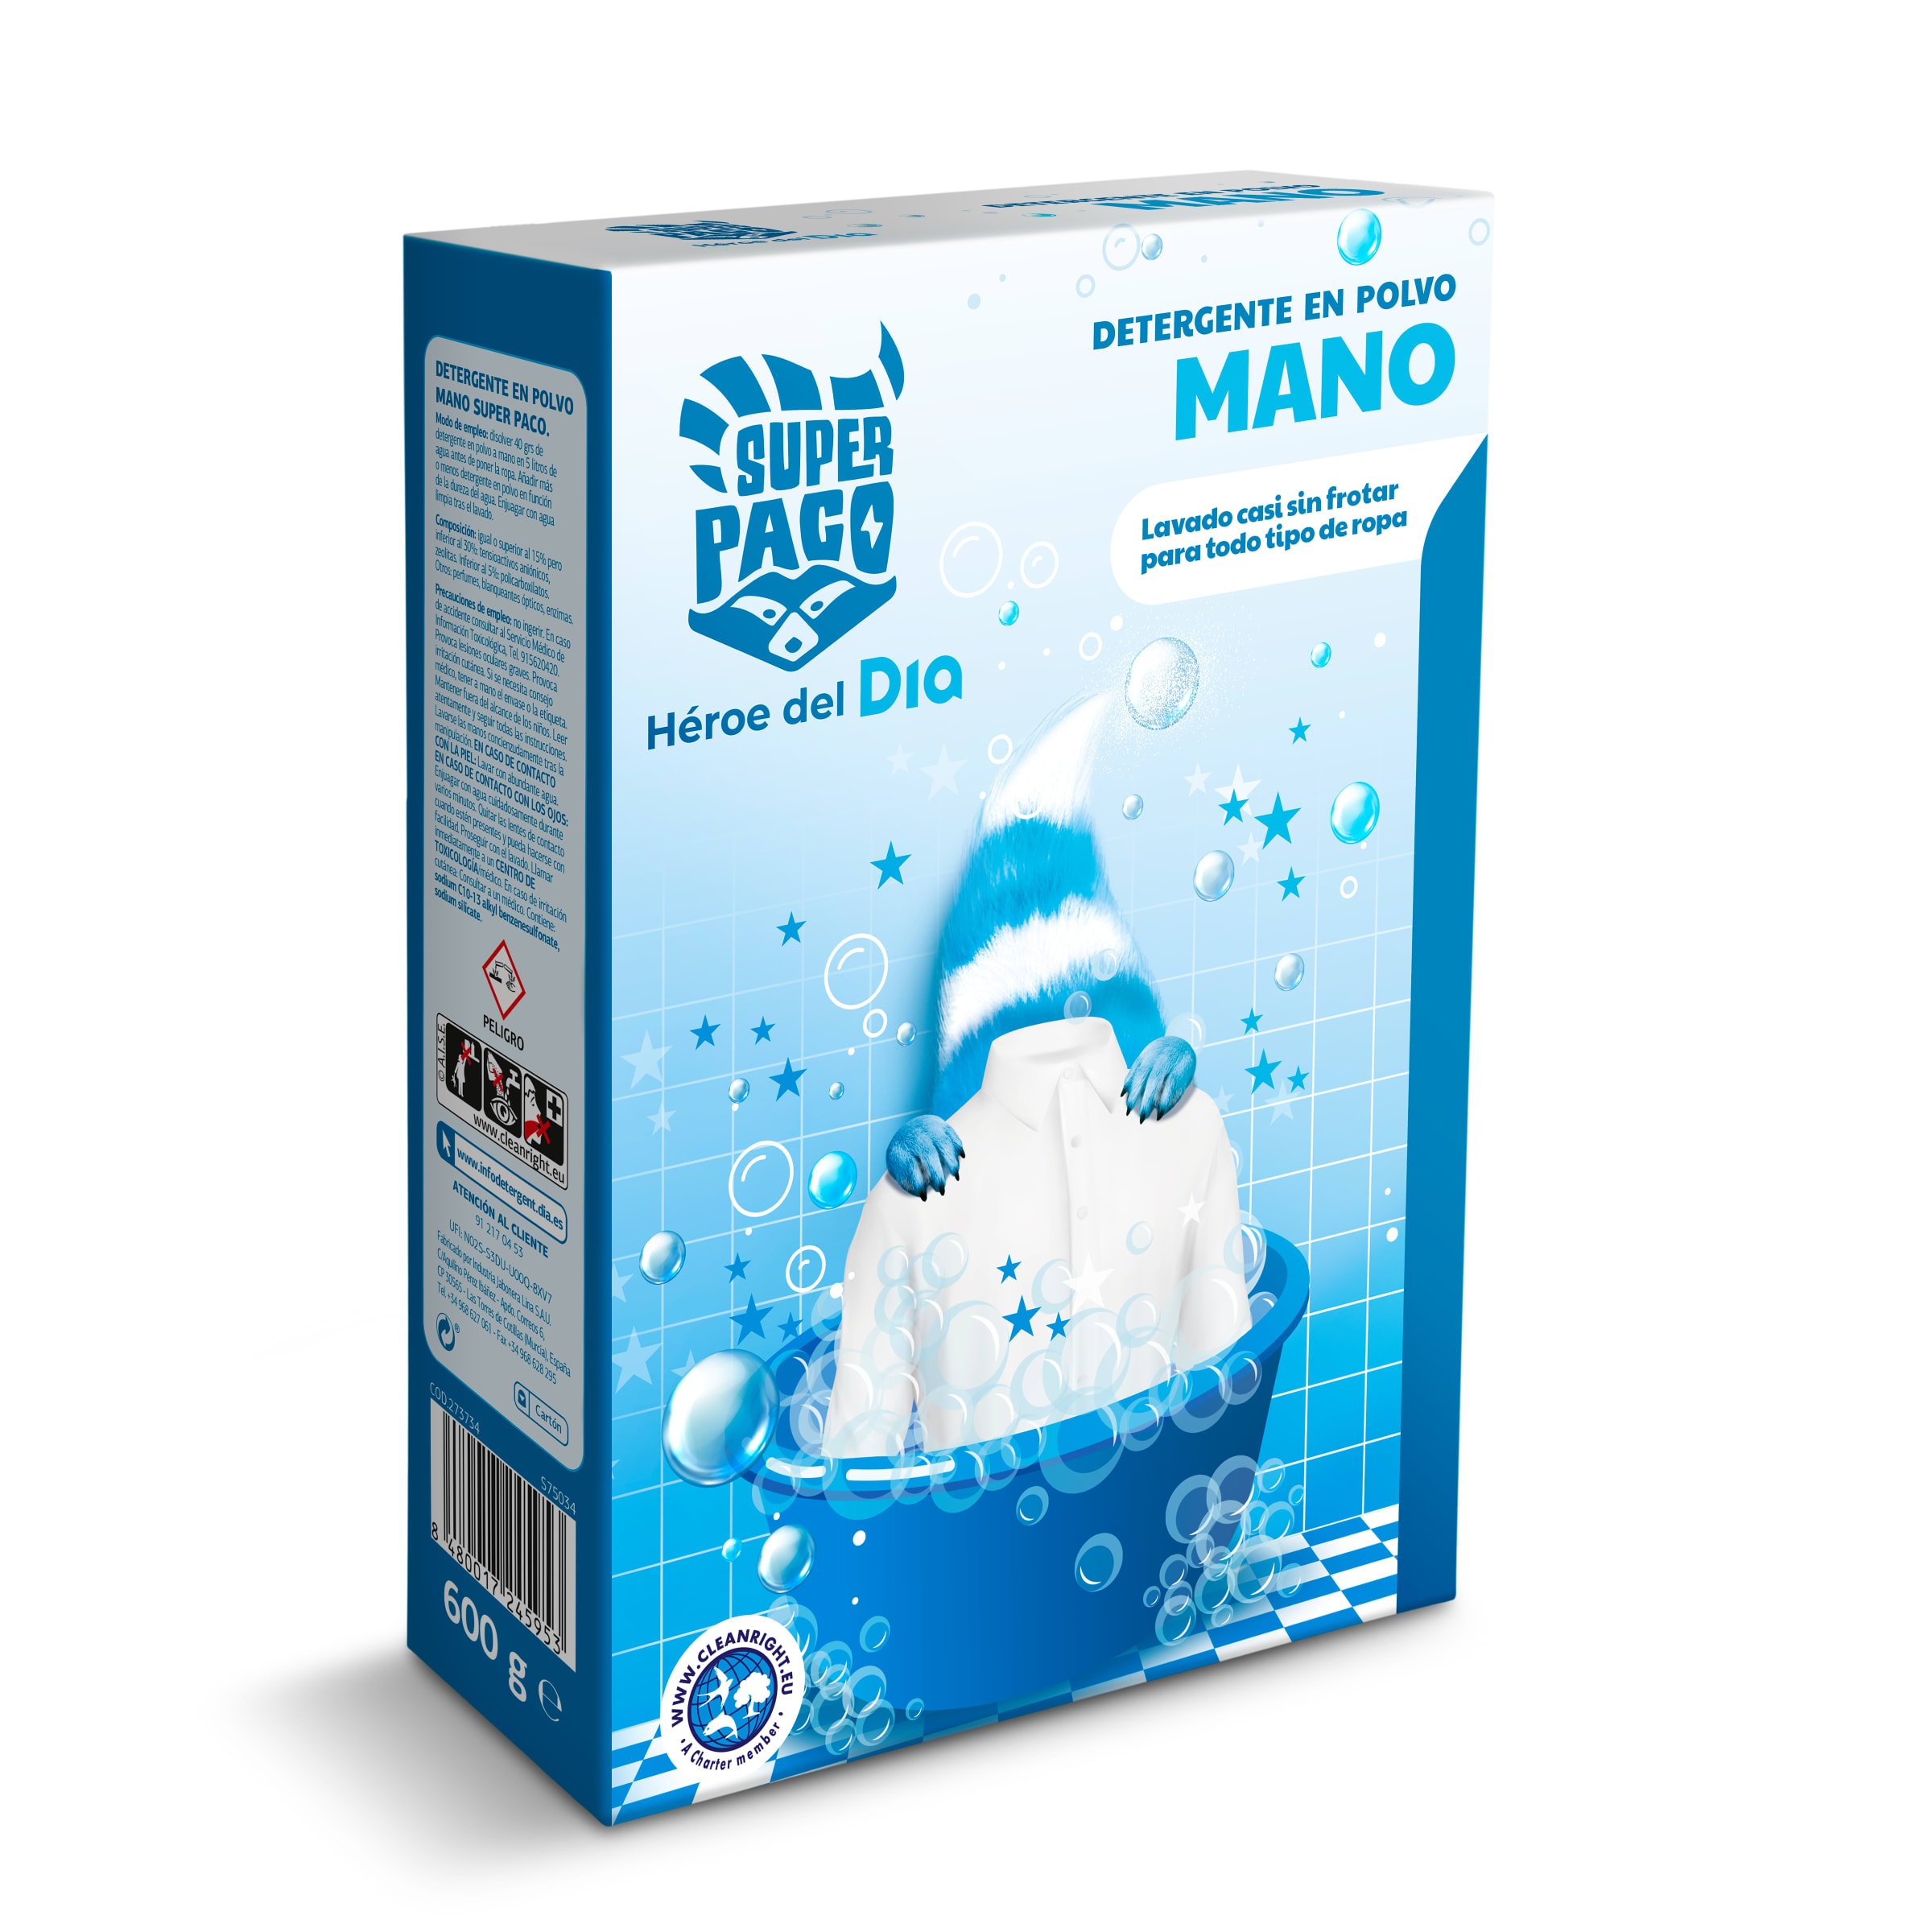 Detergente en polvo a mano Super Paco caja 600 g - Supermercados DIA